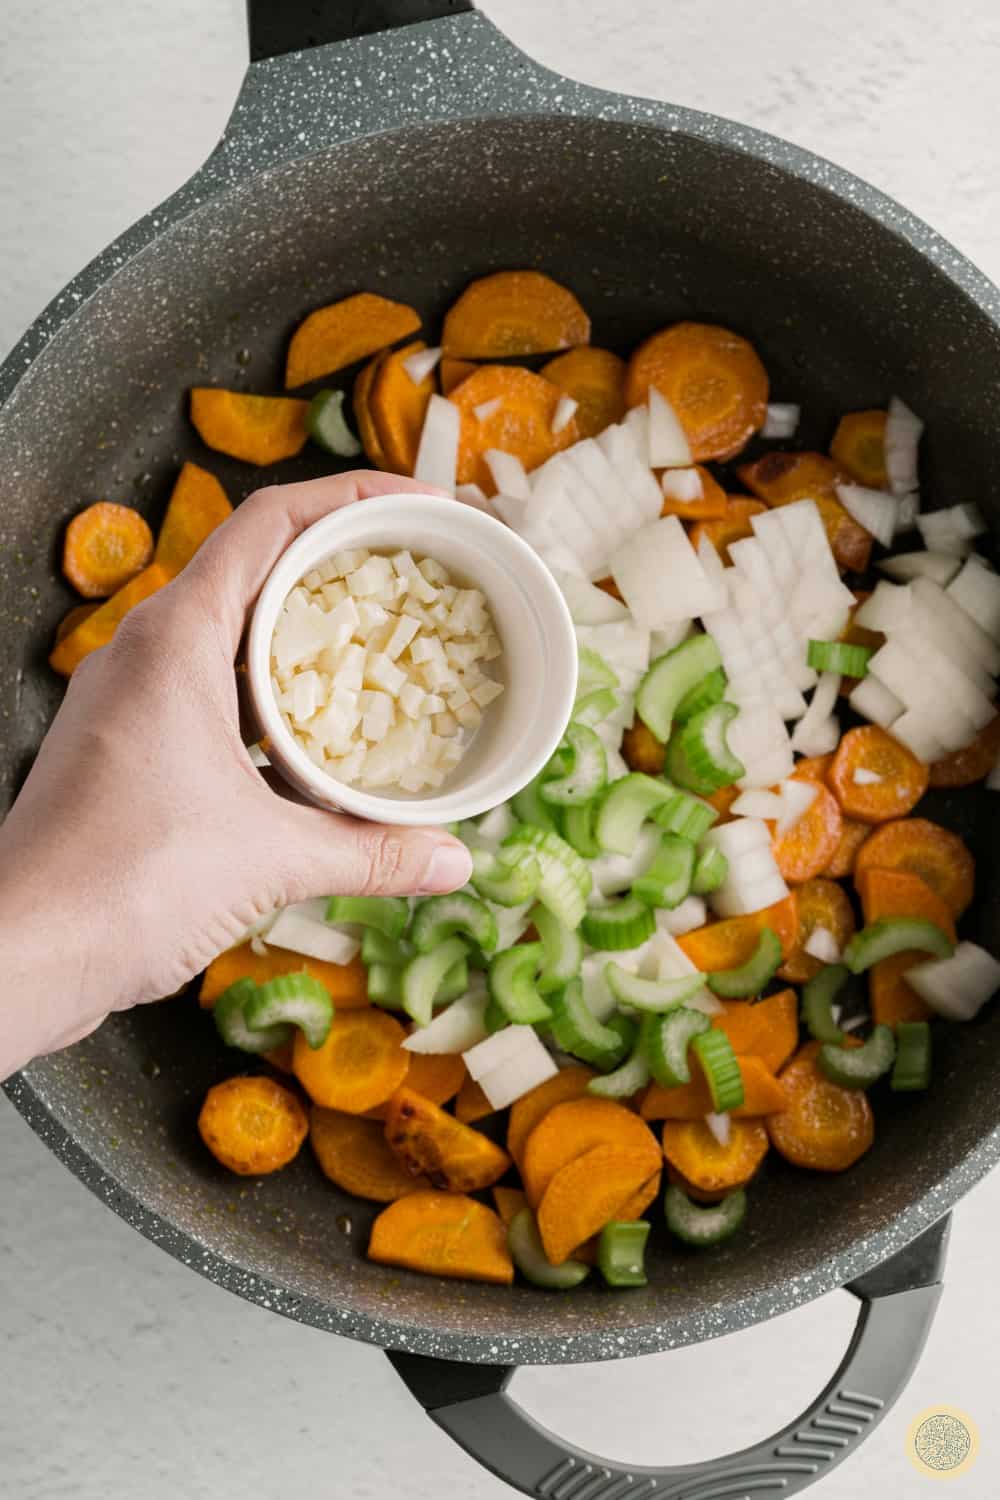 Add in the chopped garlic.